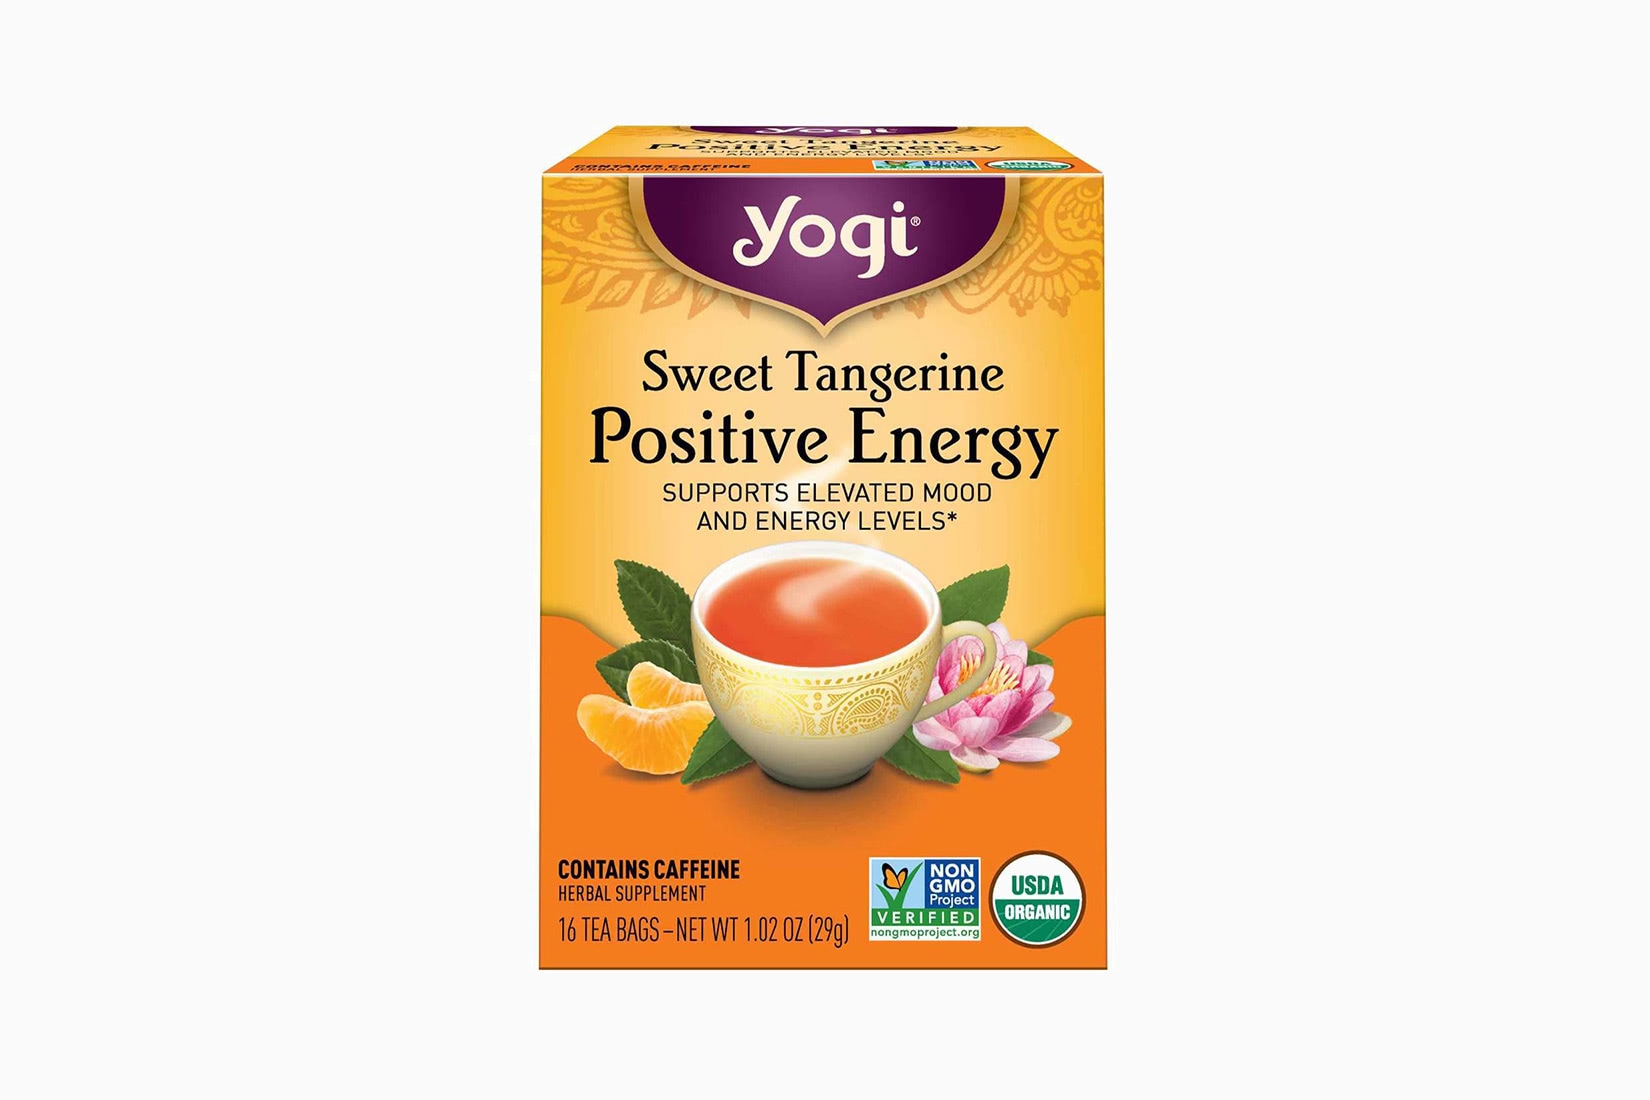 best tea brands yogi sweet tangerine - Luxe Digital